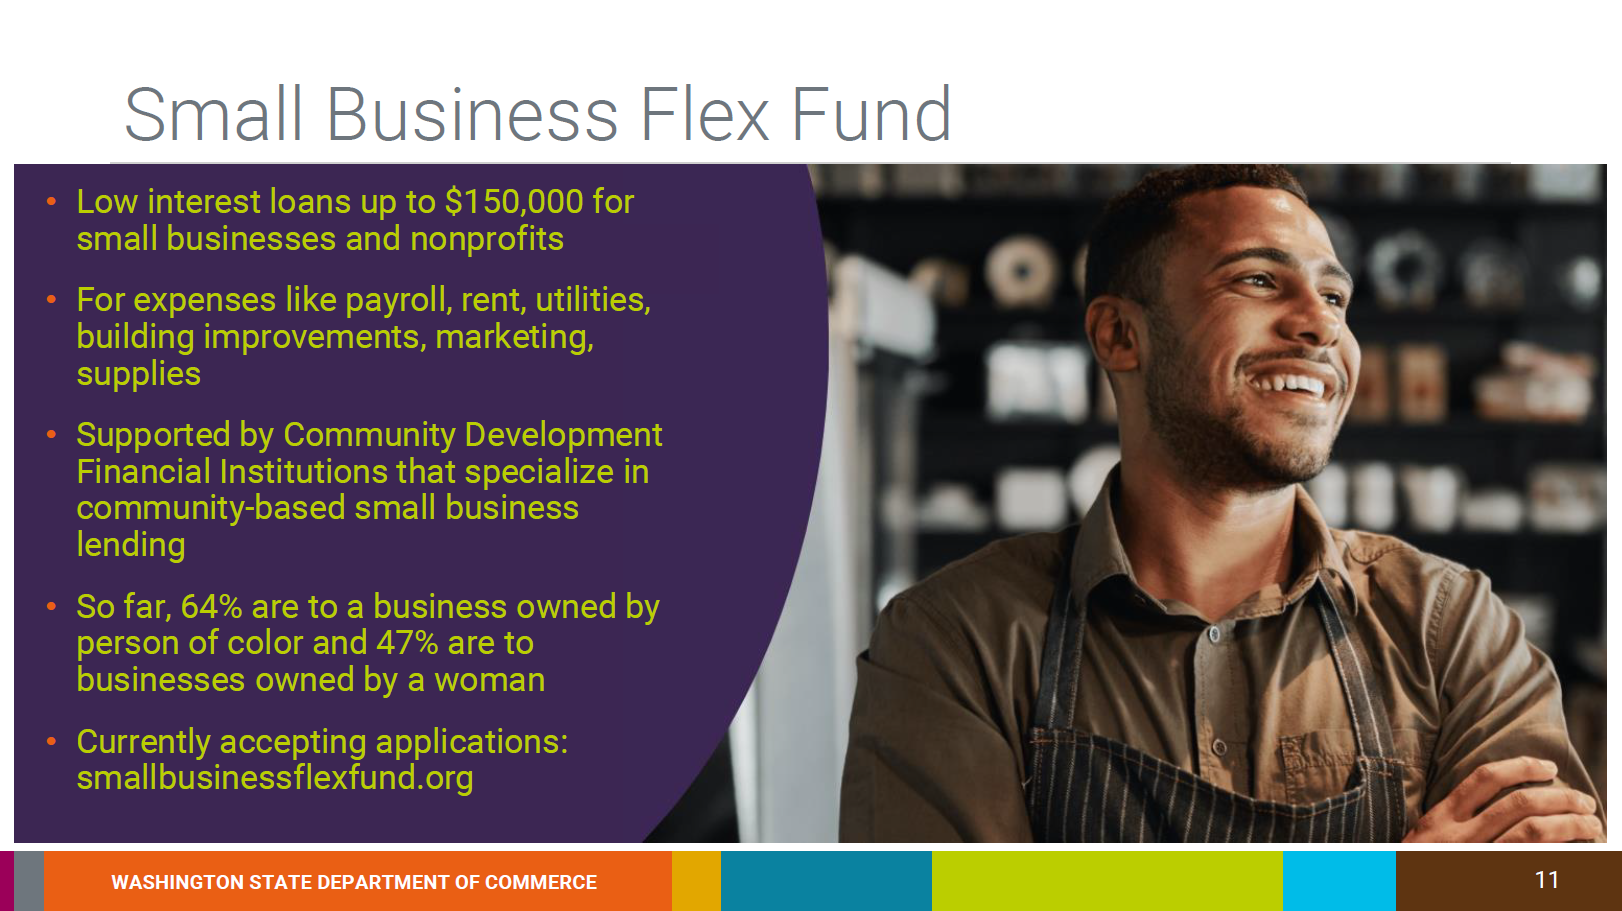 Small business flex fund illustration